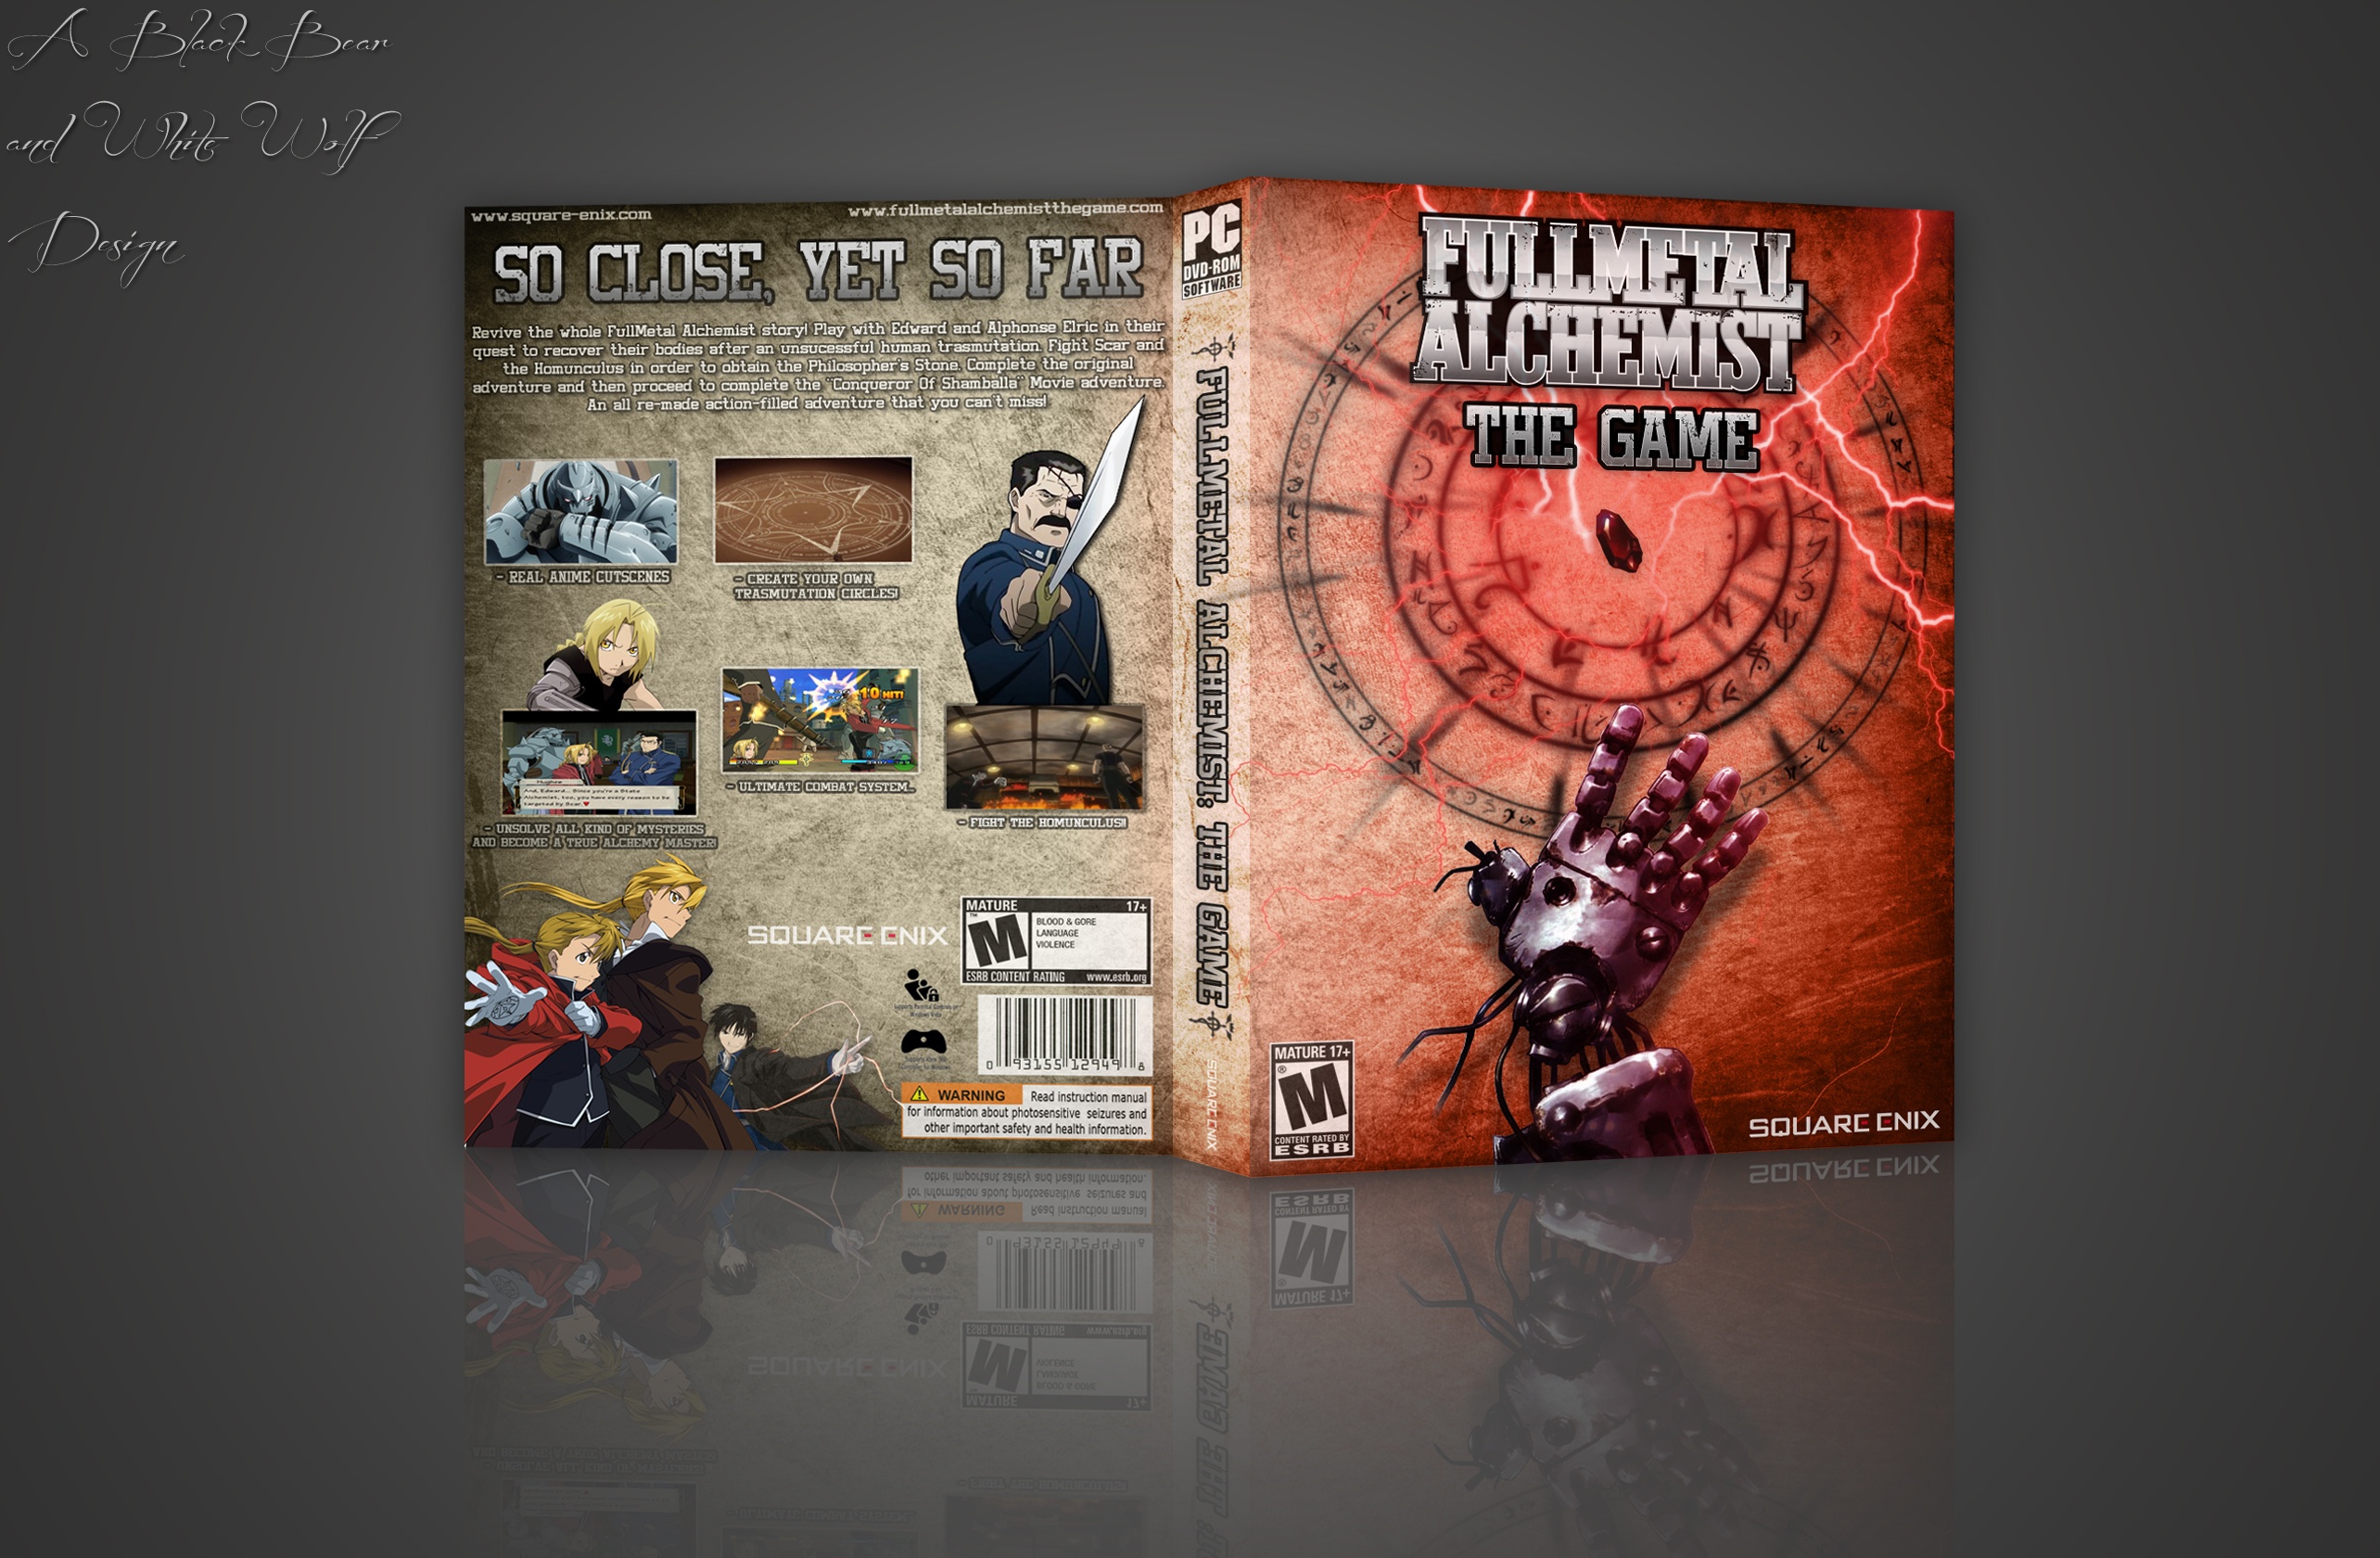 Fullmetal Alchemist: The Game box cover